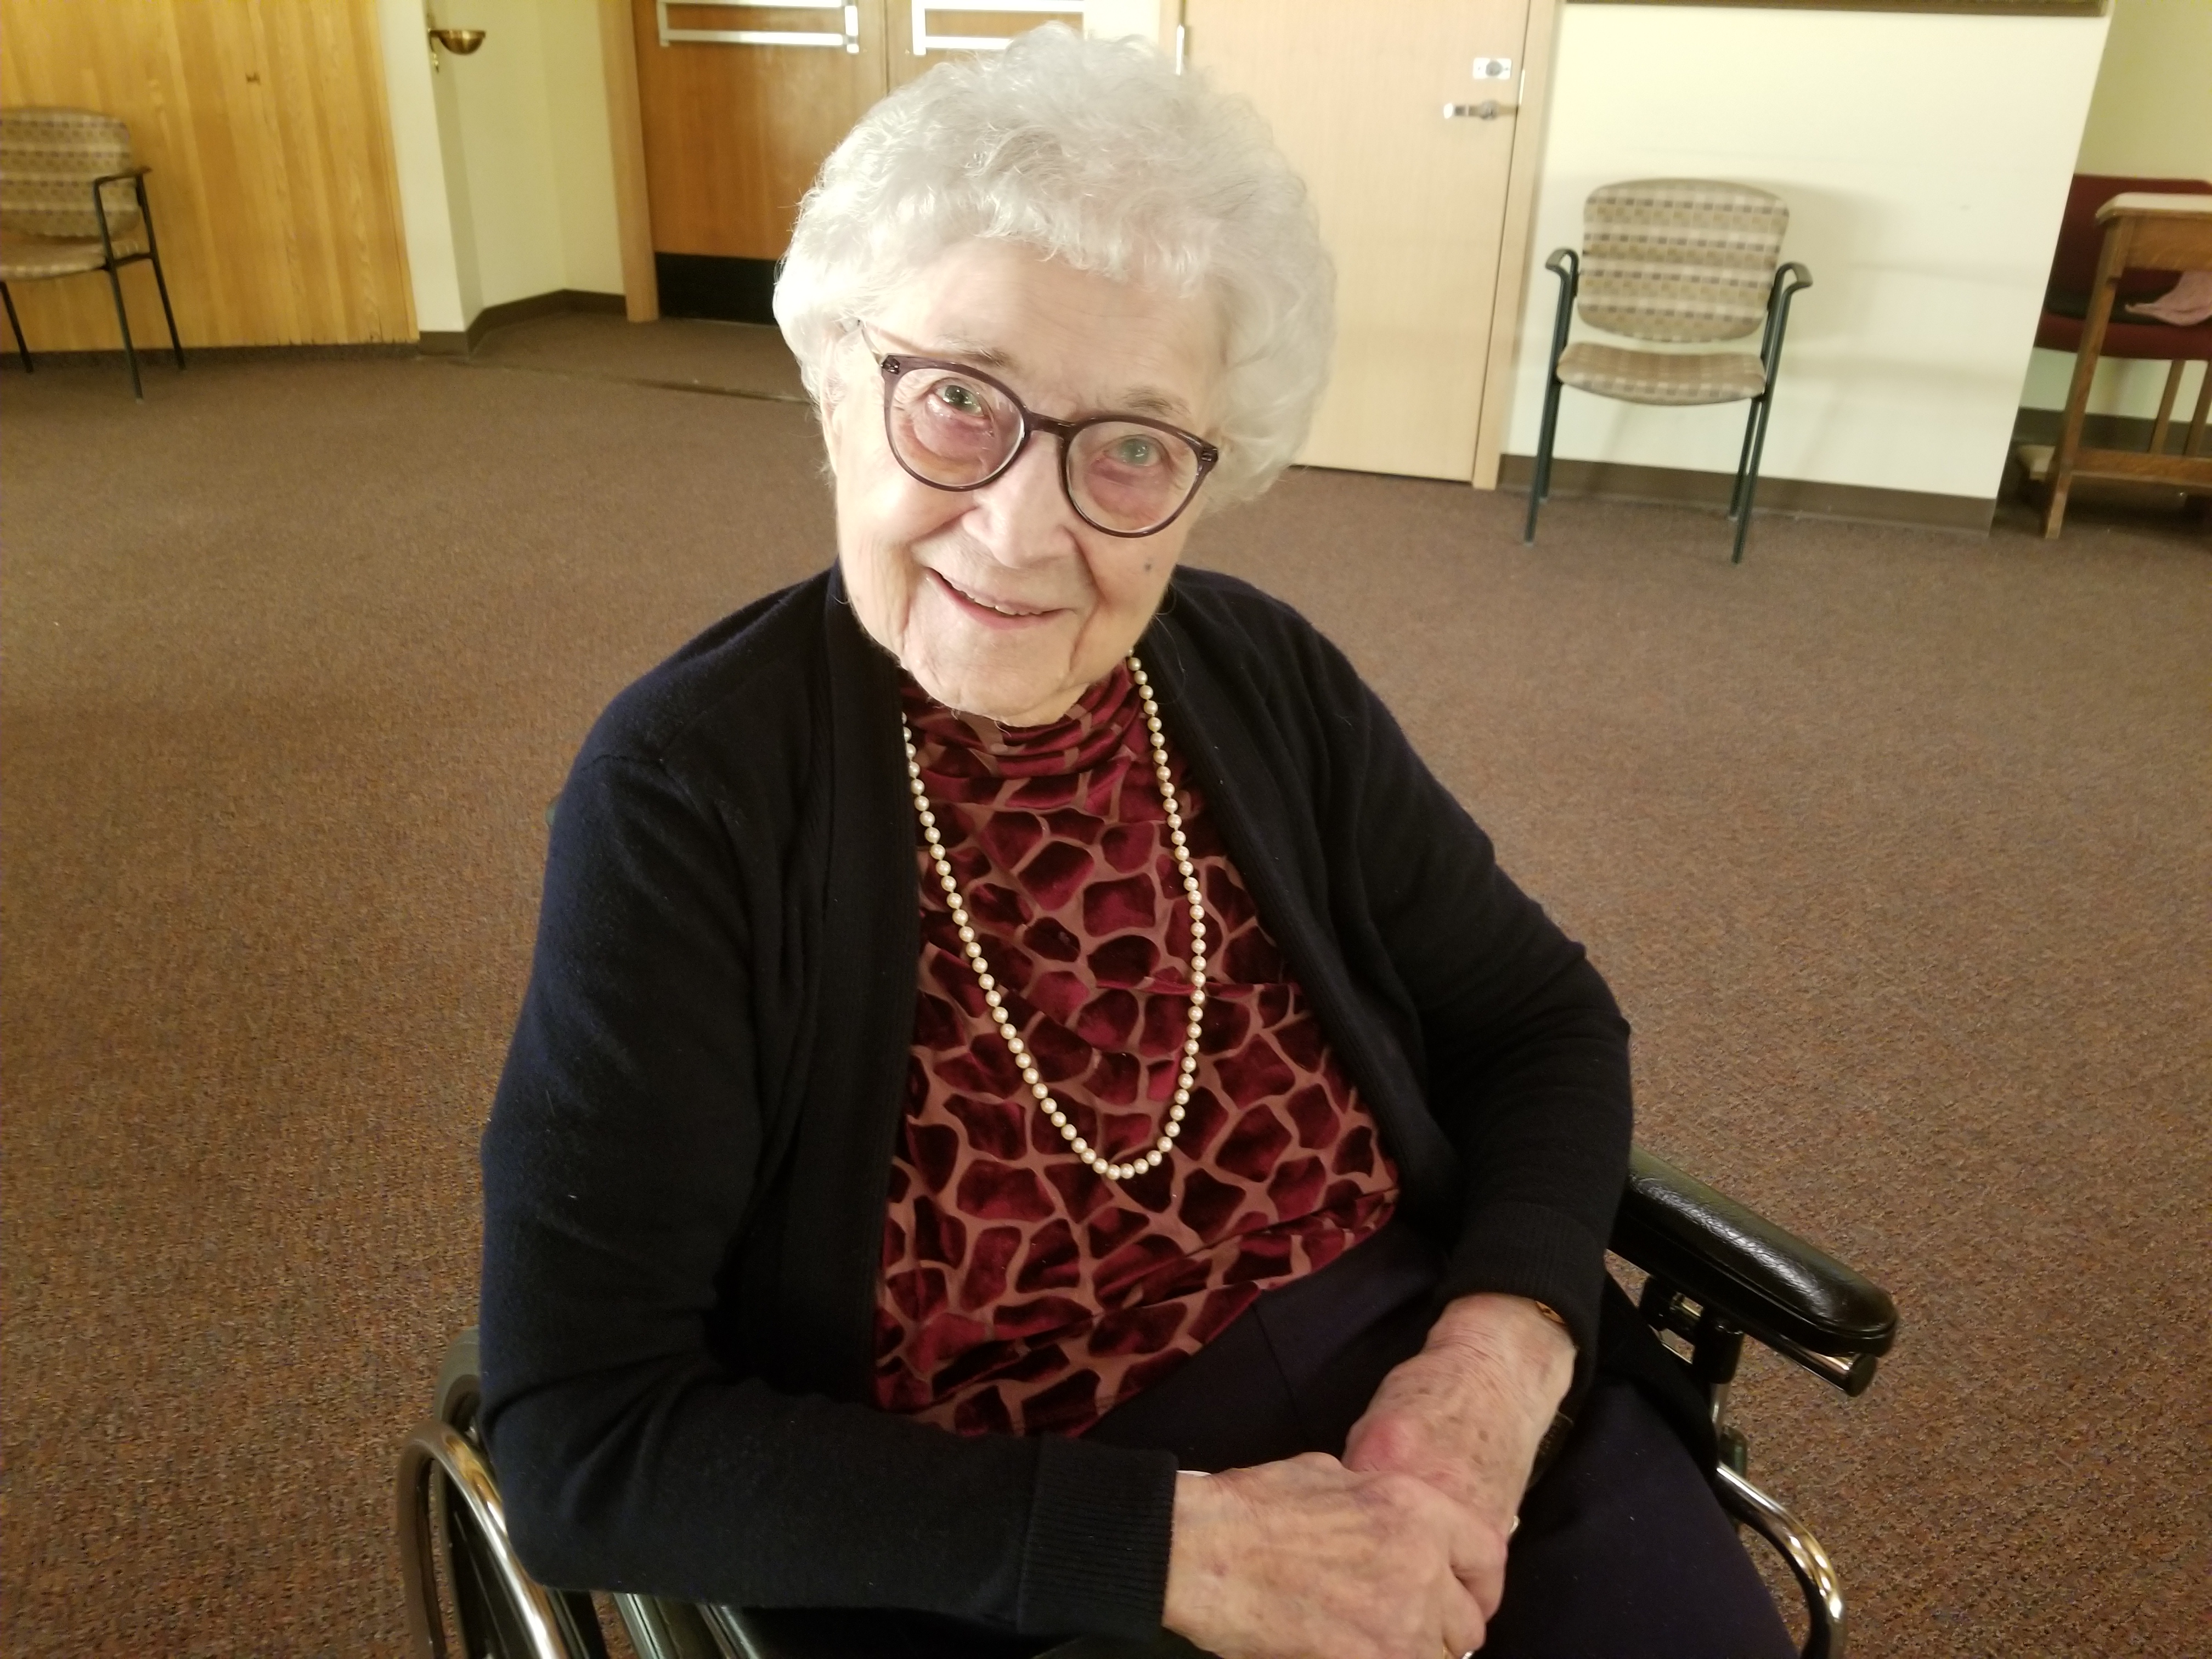 An elderly woman in a wheelchair